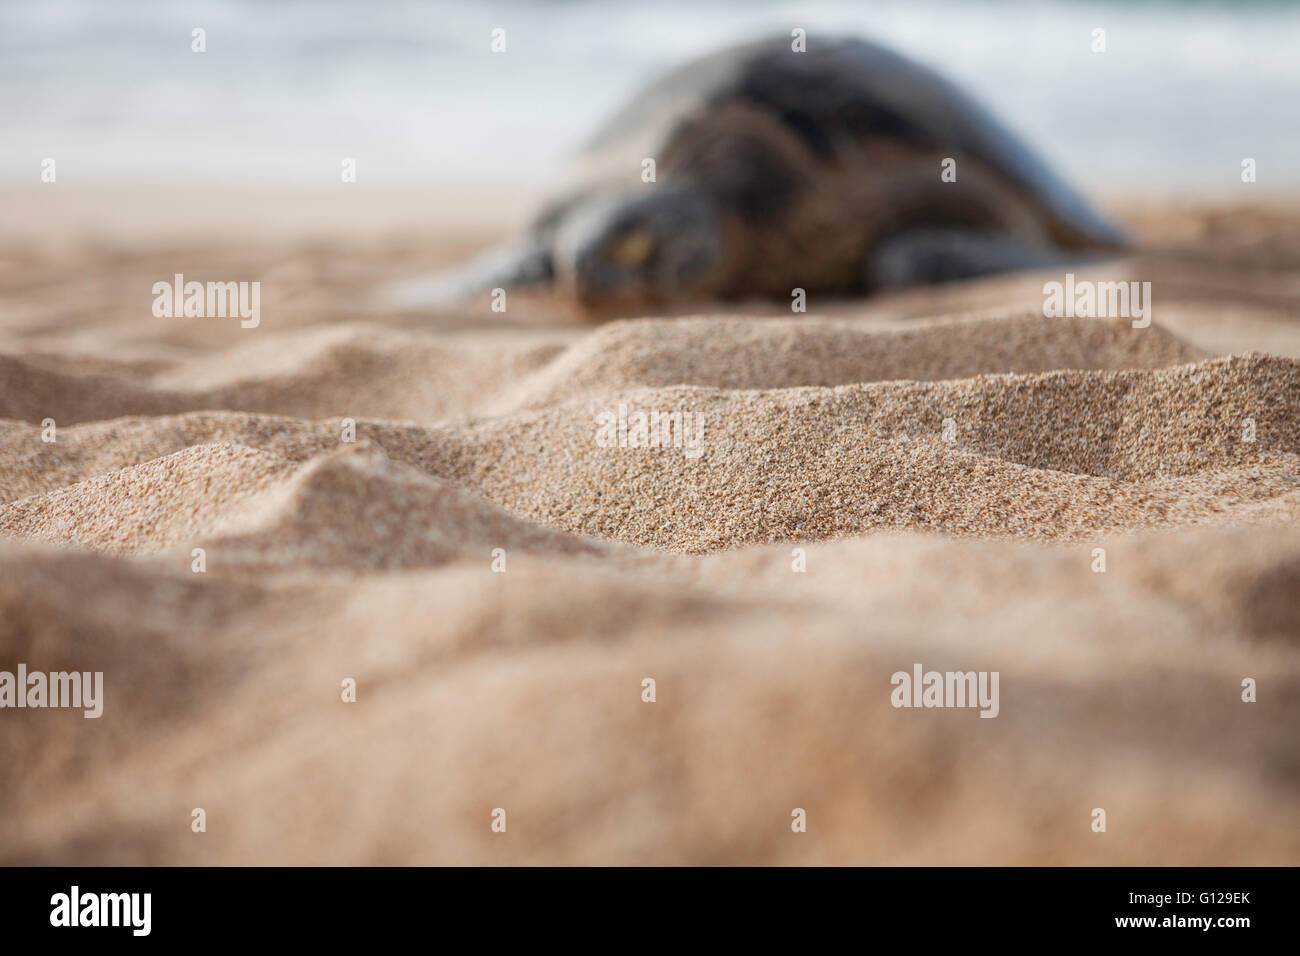 Honu, Green Sea Turtle resting on North Shore Oahu Beach, Hawaii.  Basking in sun near shore/ocean. Stock Photo